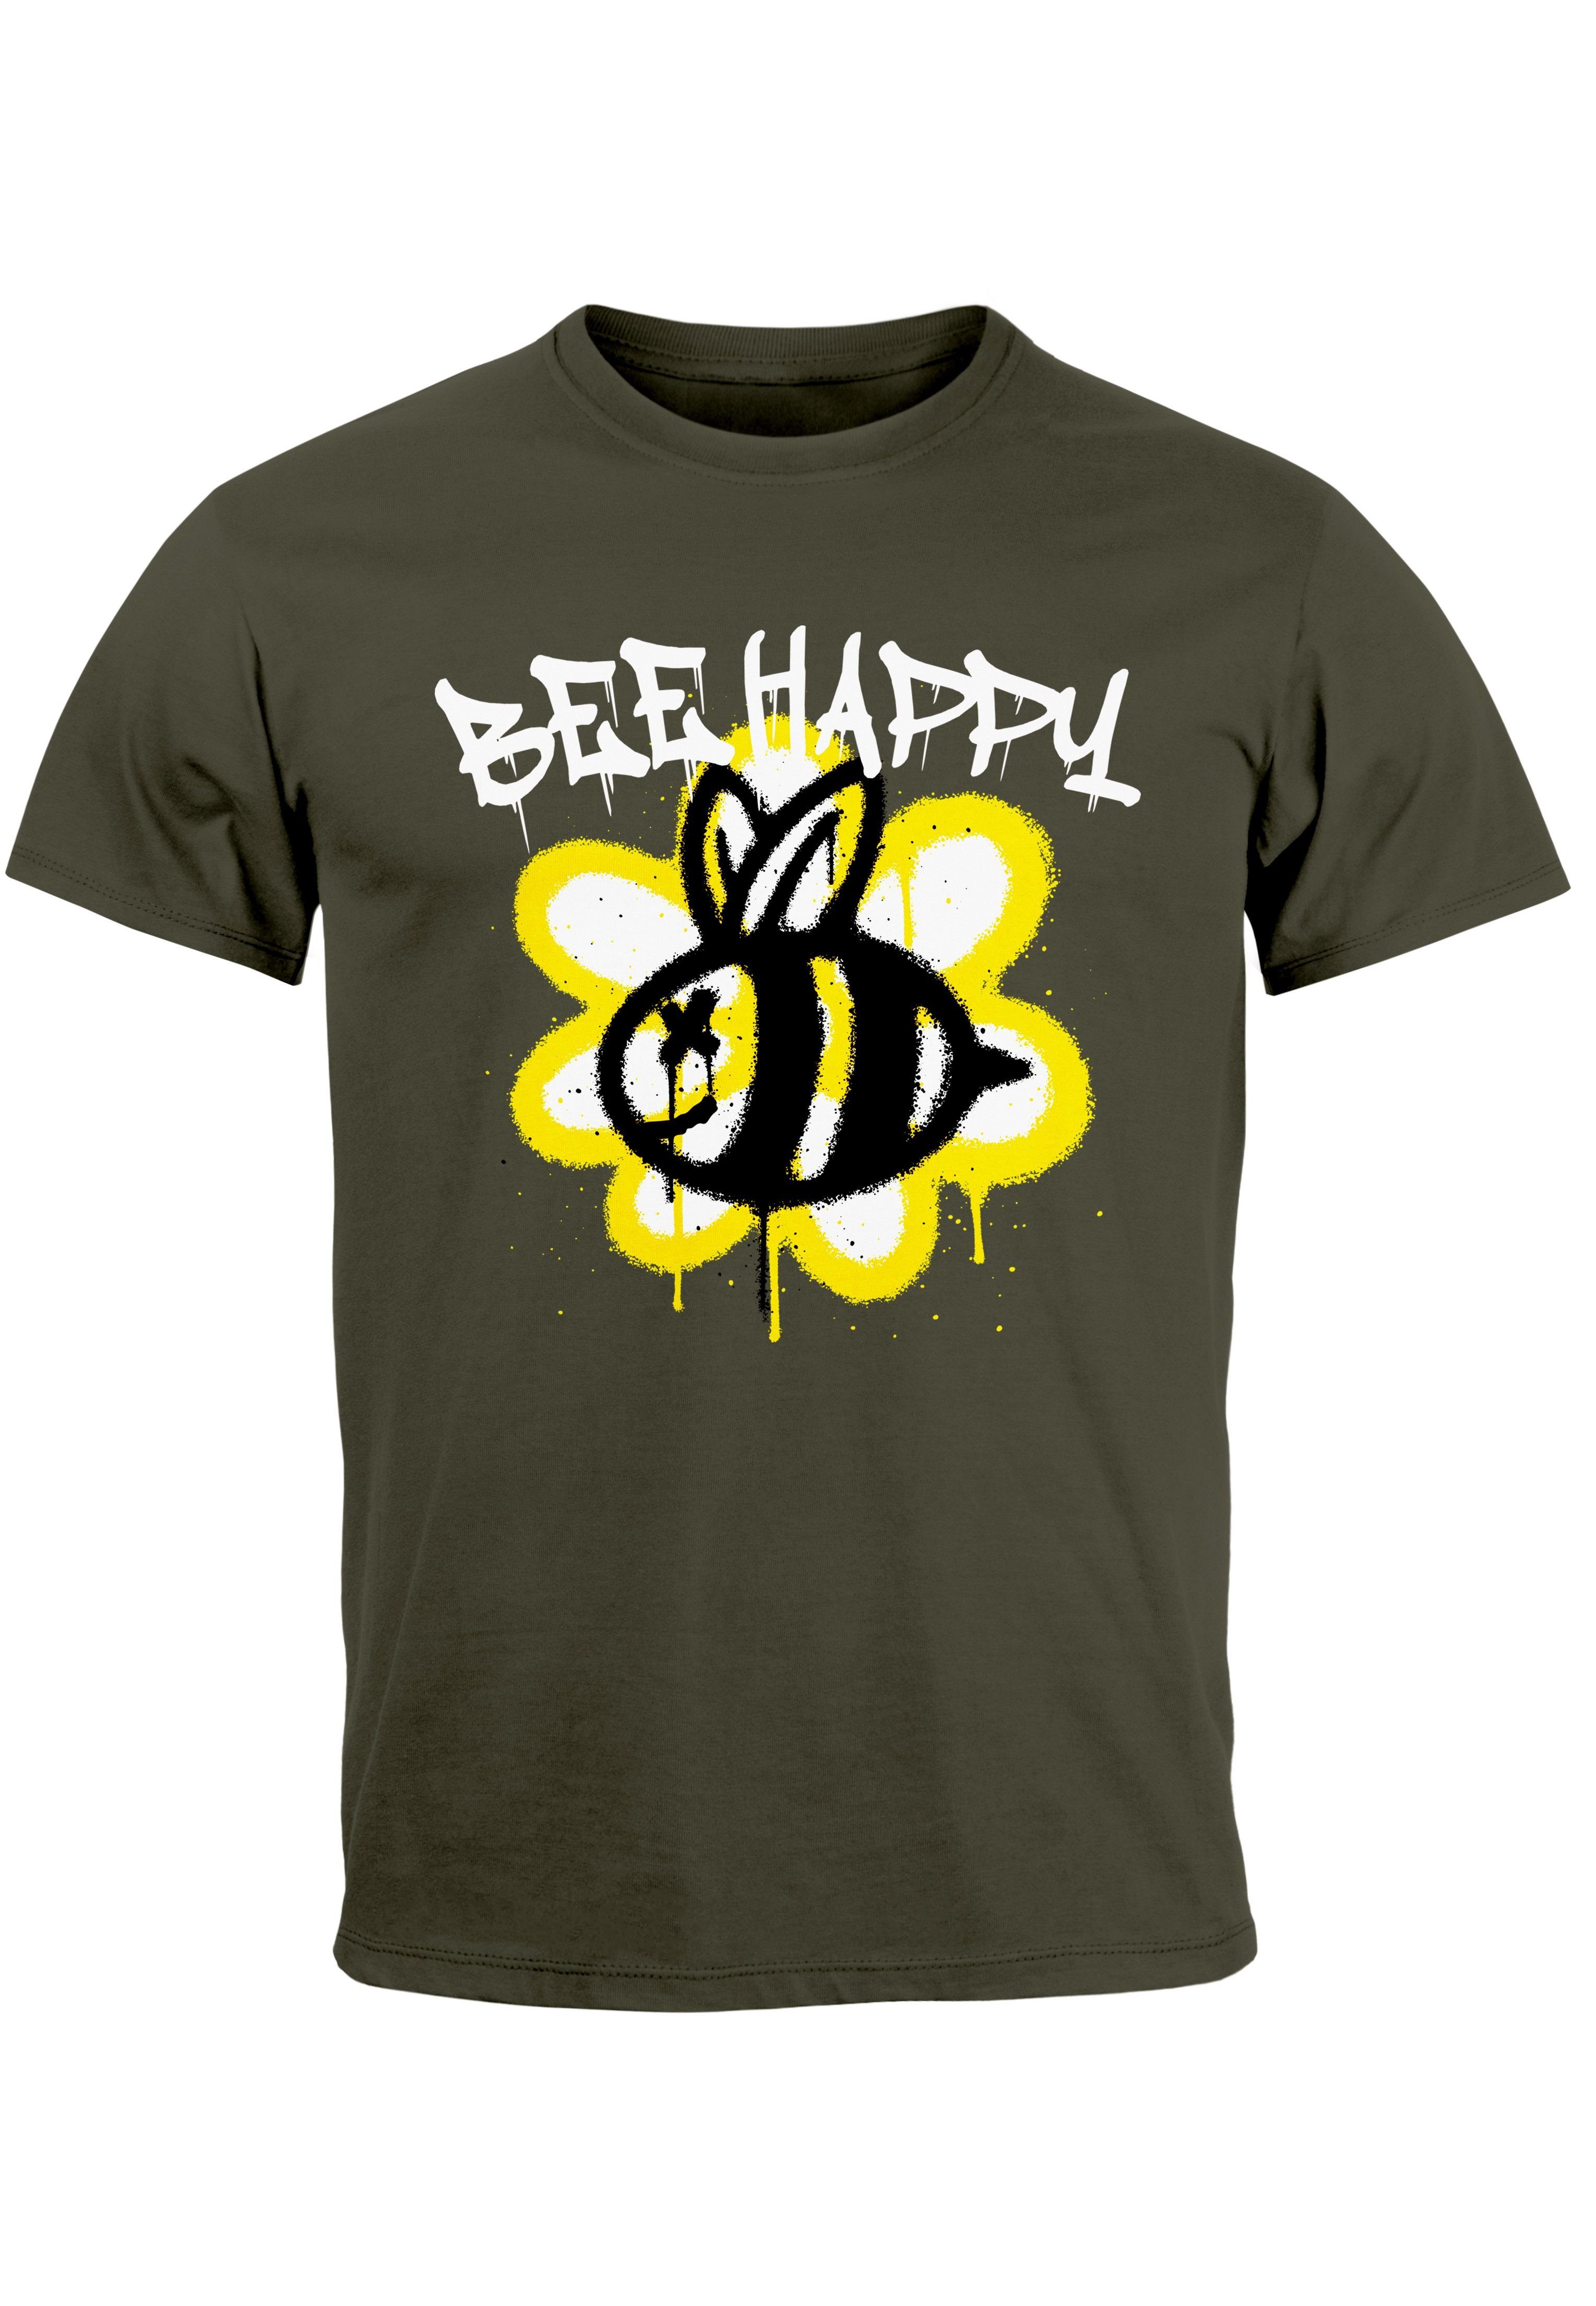 Neverless Print-Shirt Herren T-Shirt Aufdruck Bee Happy Biene Blume Graffiti SchriftzugFashi mit Print army